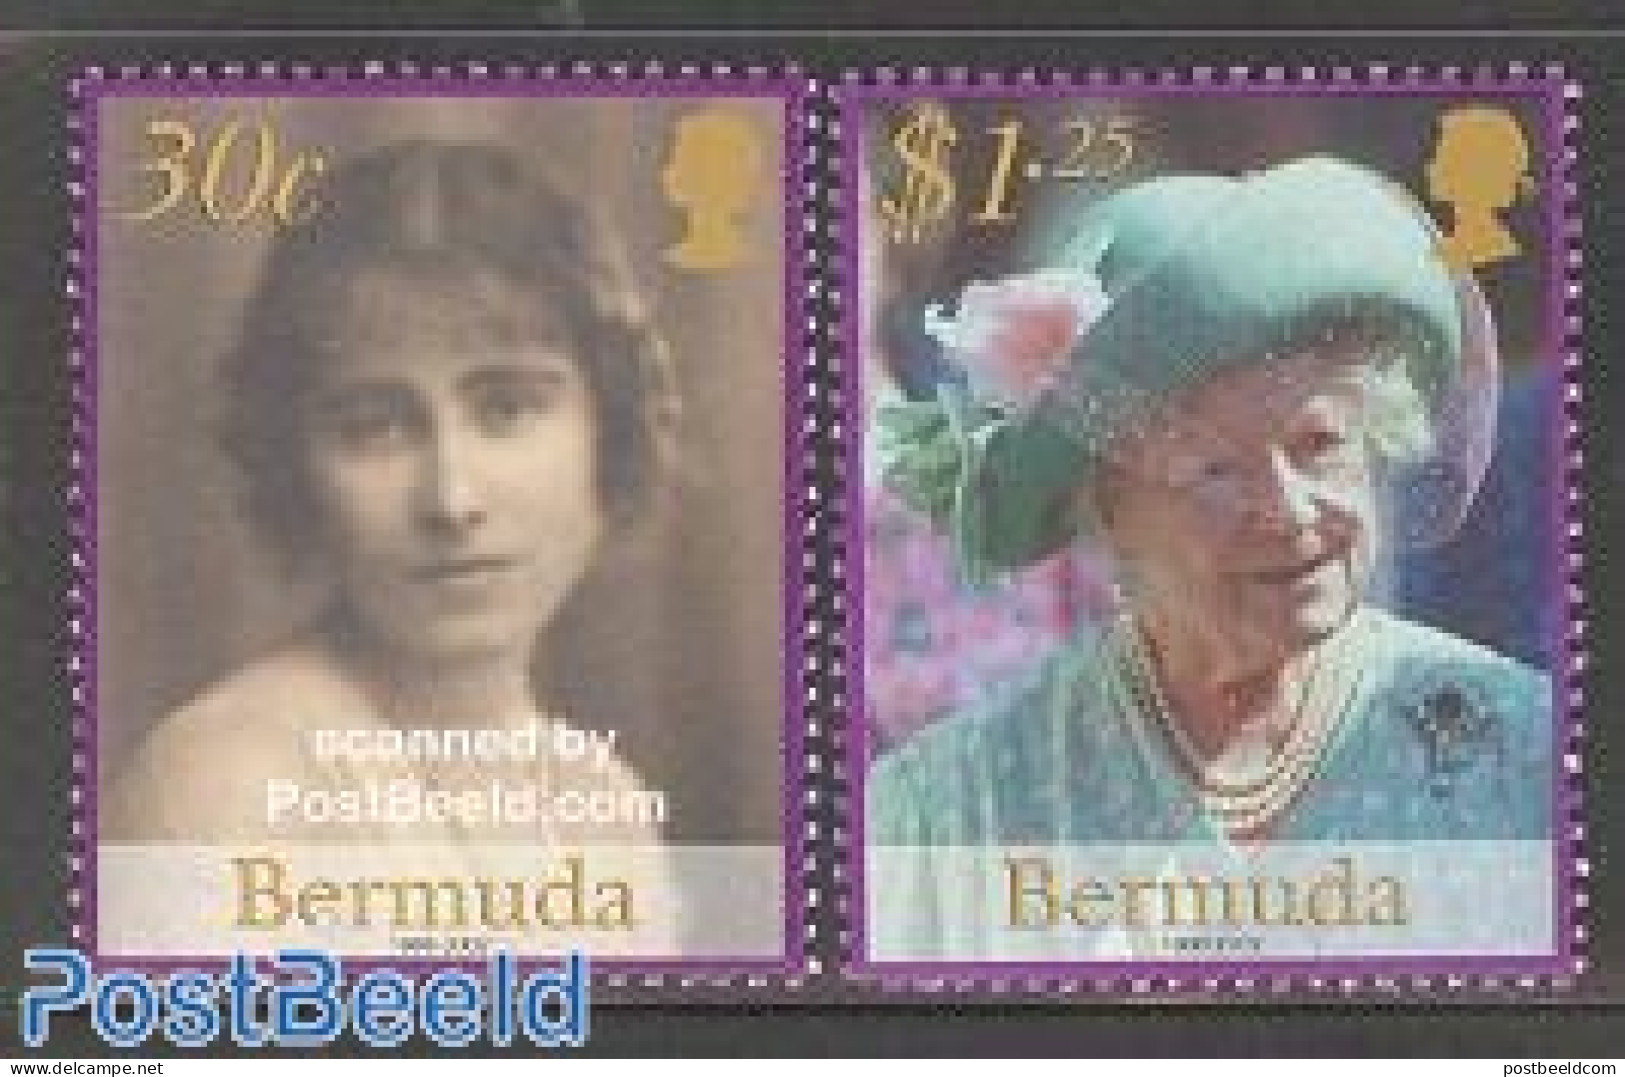 Bermuda 2002 Queen Mother 2v, Mint NH, History - Kings & Queens (Royalty) - Royalties, Royals